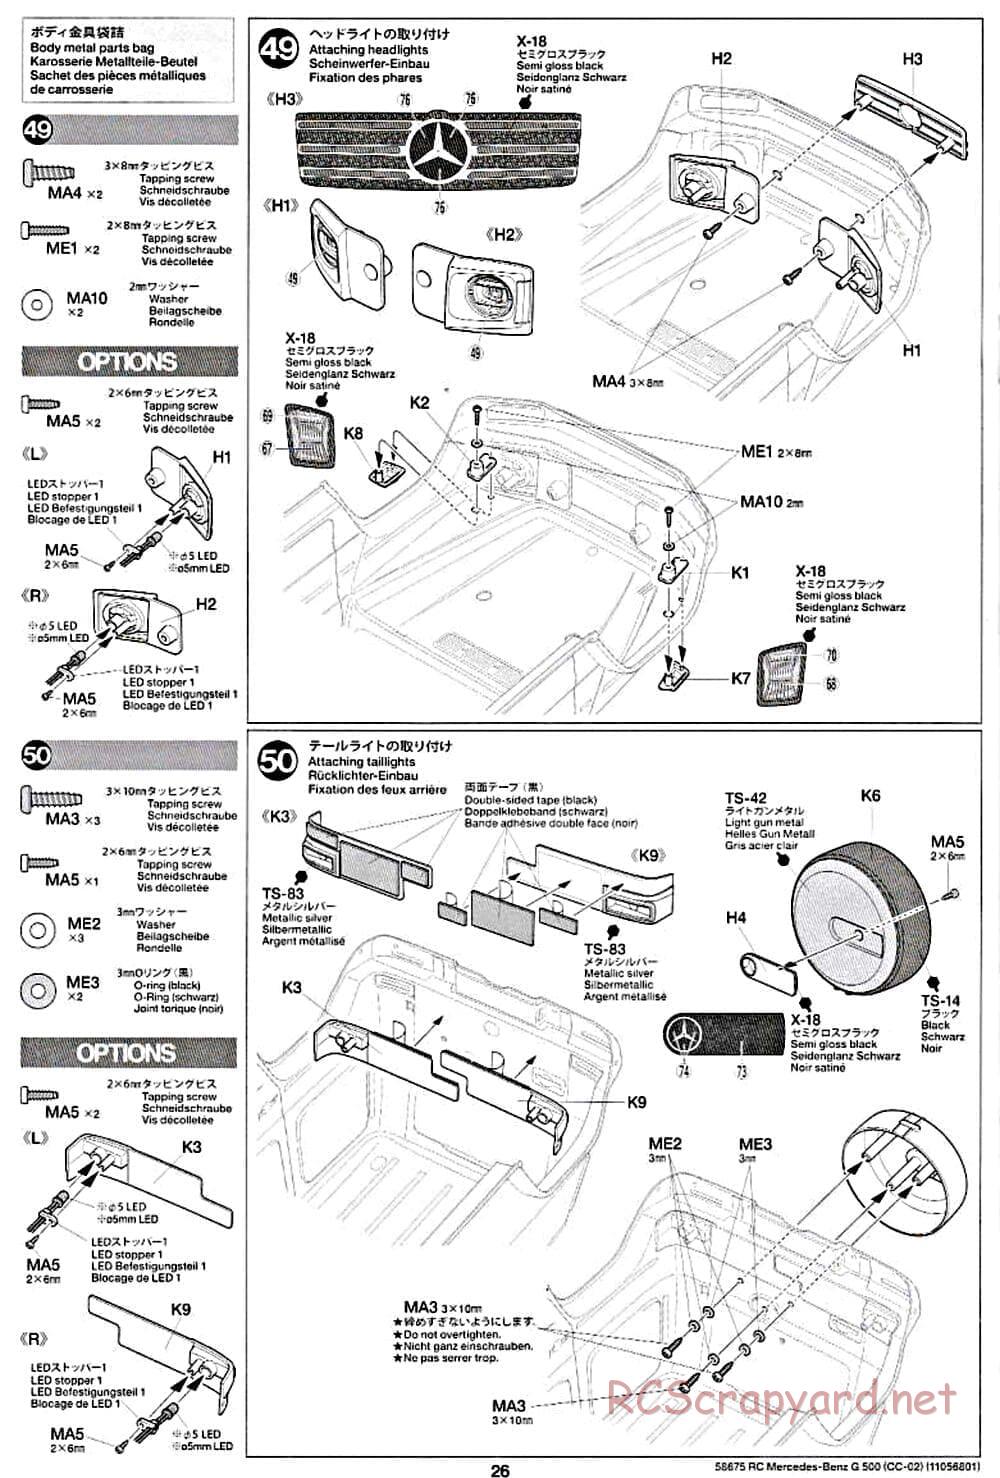 Tamiya - Mercedes-Benz G500 - CC-02 Chassis - Manual - Page 26